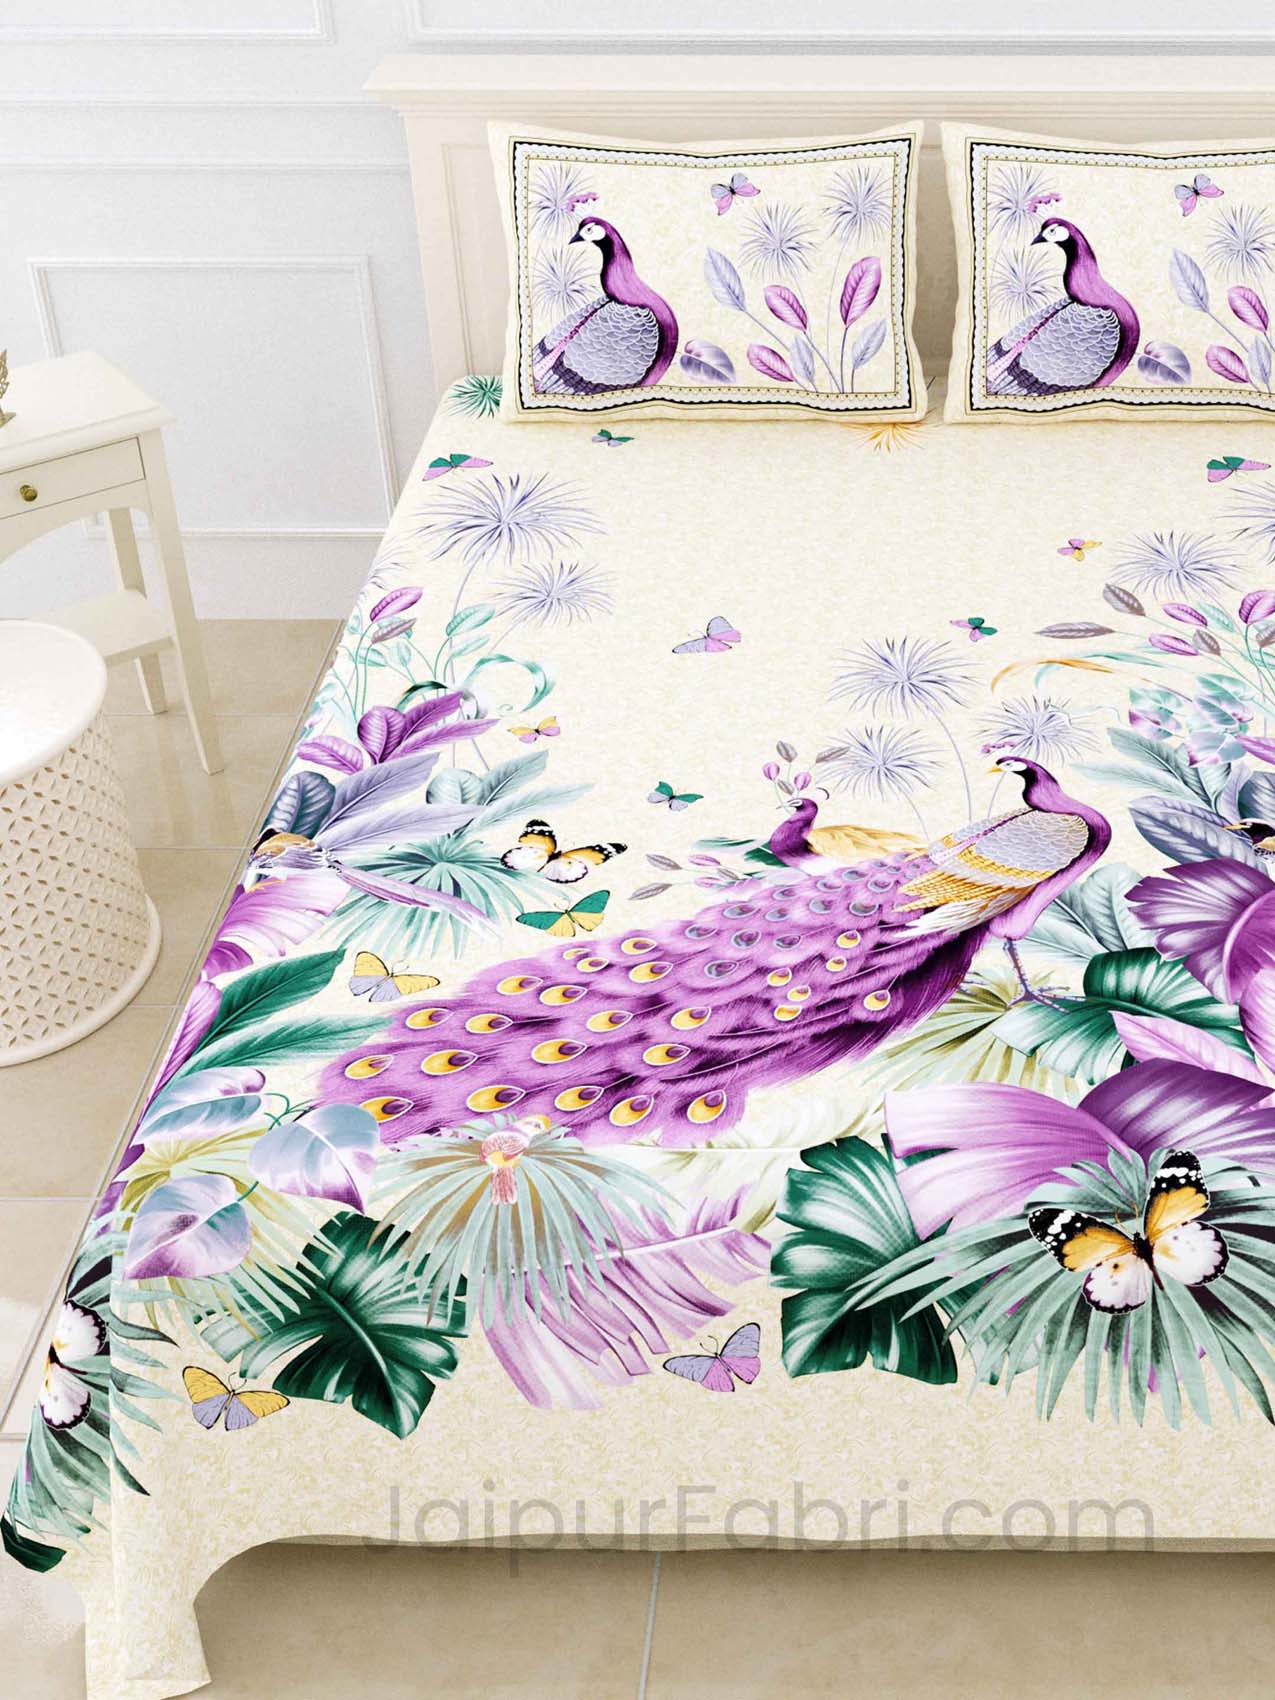 Peacock Lavender Digital Print Luxury Cotton King Size Bedsheet